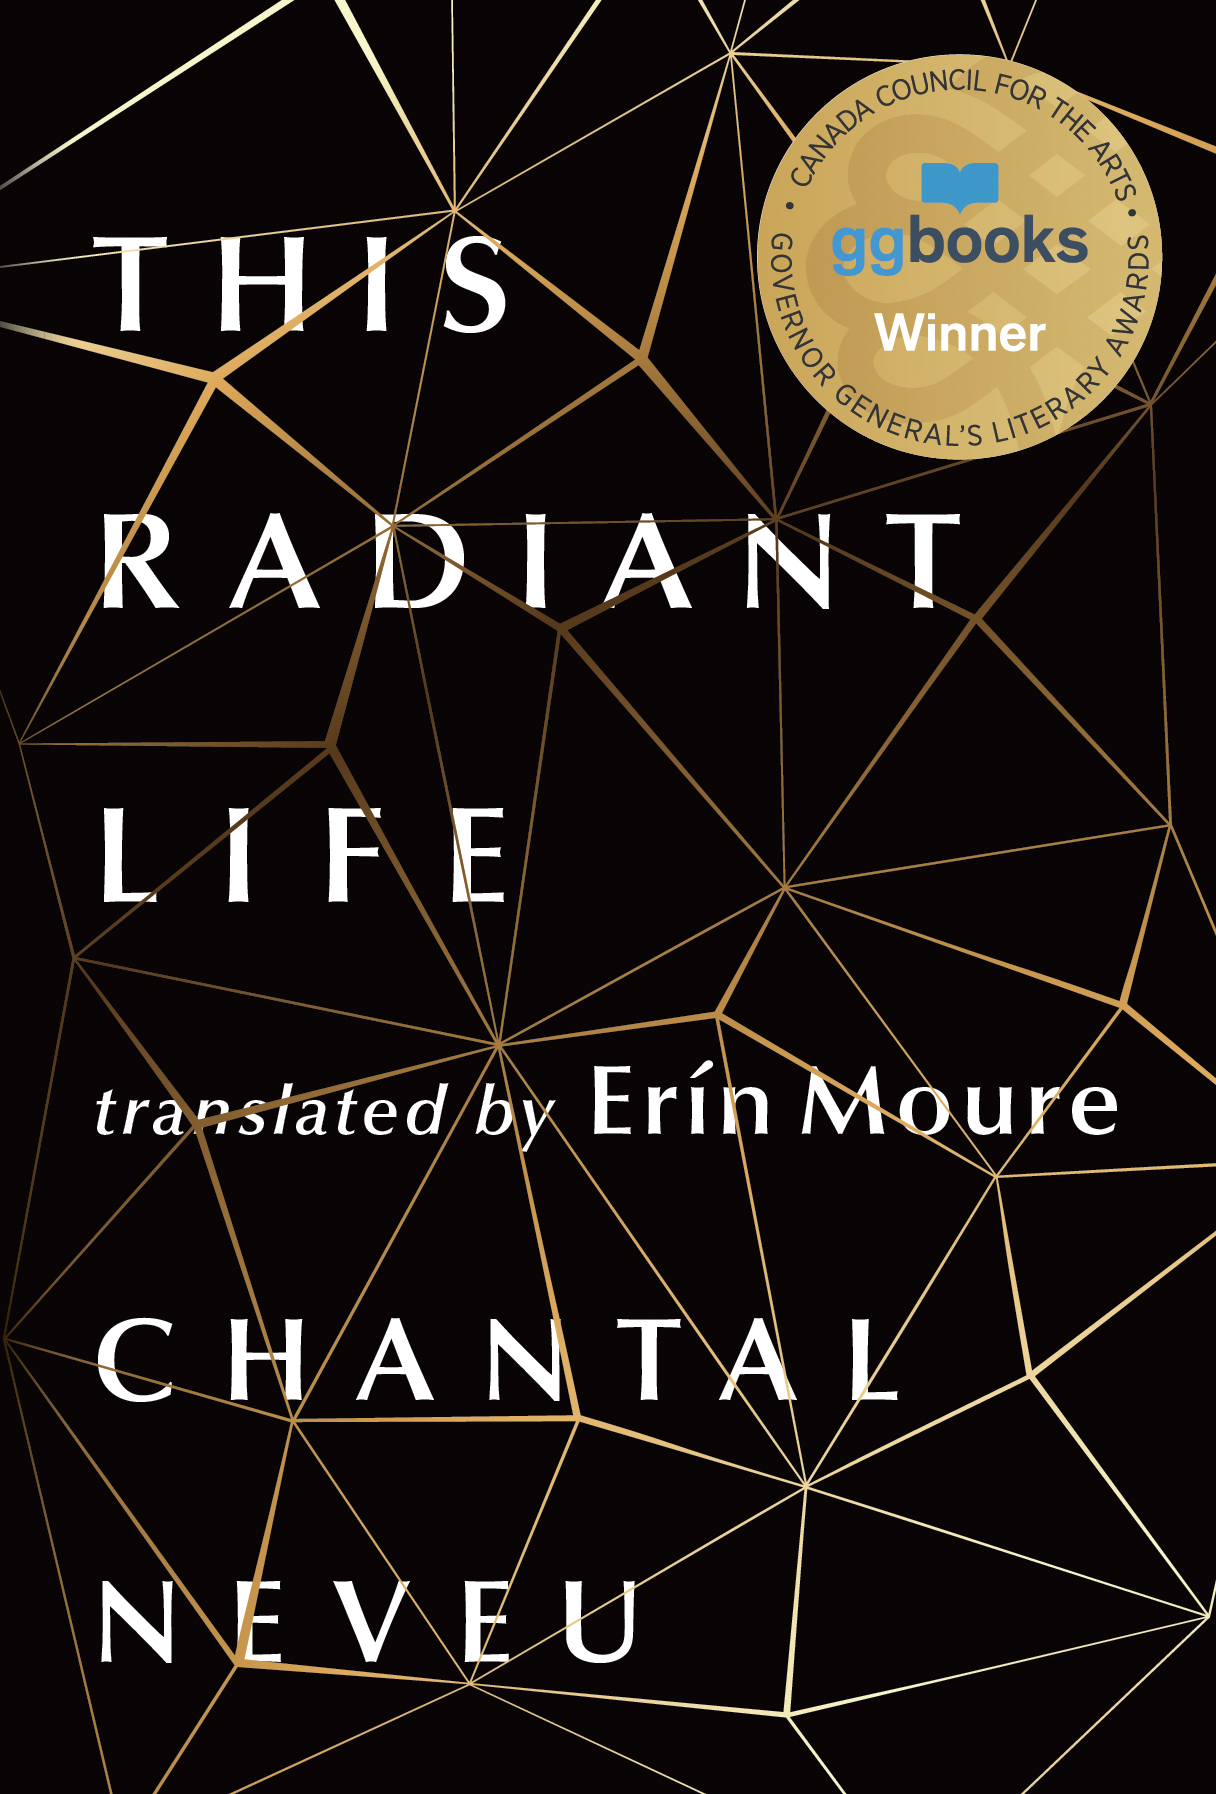 This　Erín　by　Radiant　Translated　Chantal　Life　Neveu,　by　Moure　Book*hug　Press